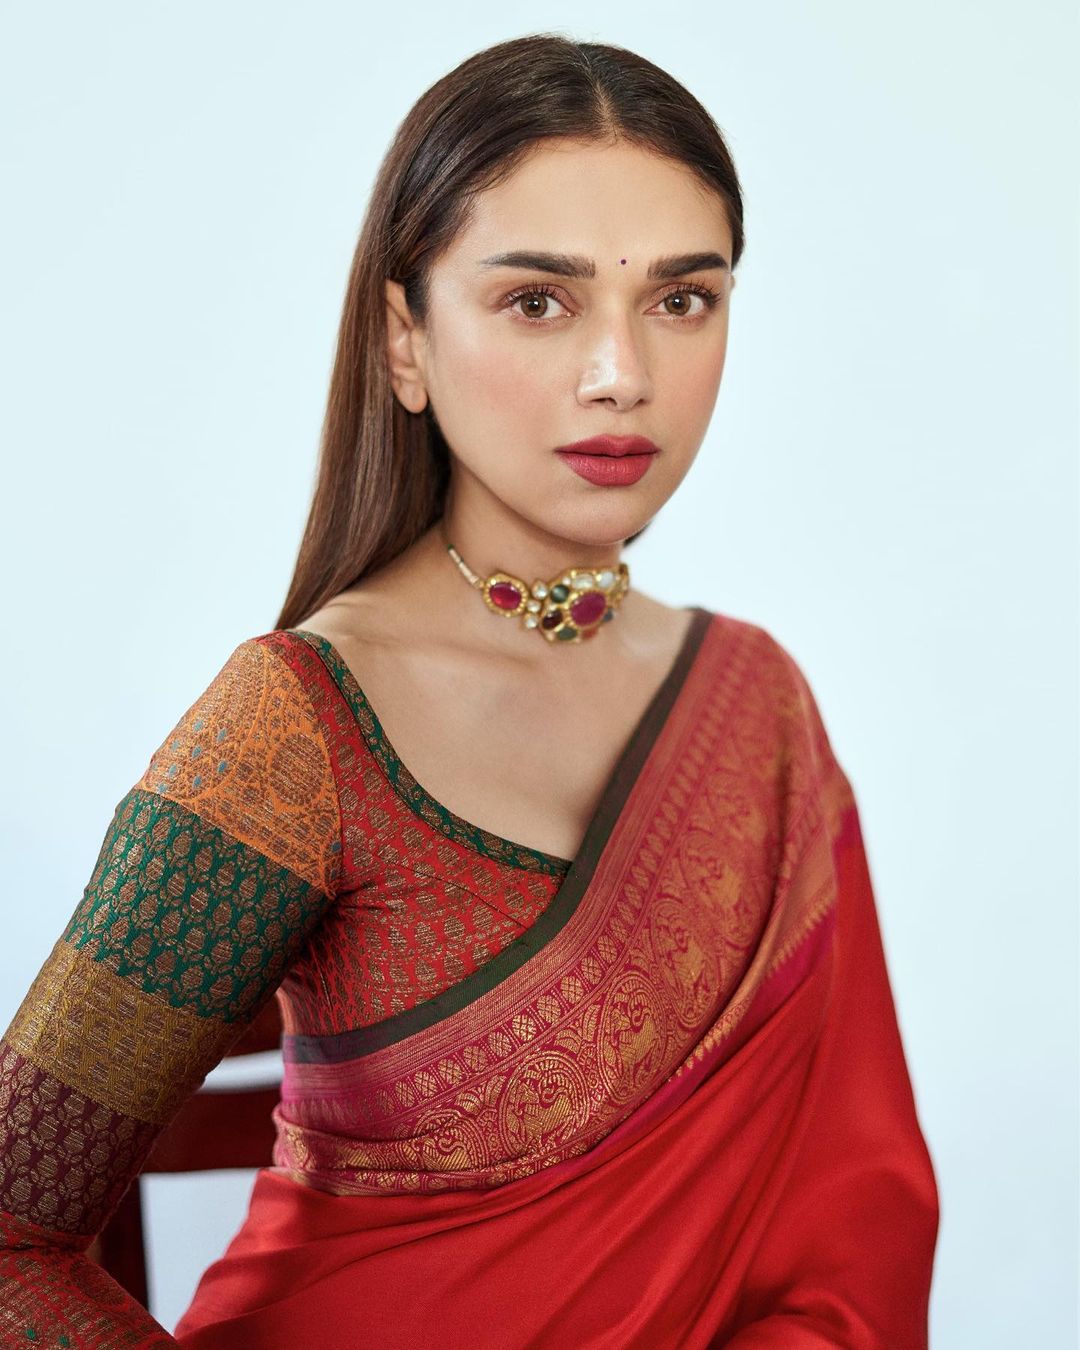 Aditi Rao Hydari looks stunning in the brocade blouse and saree.